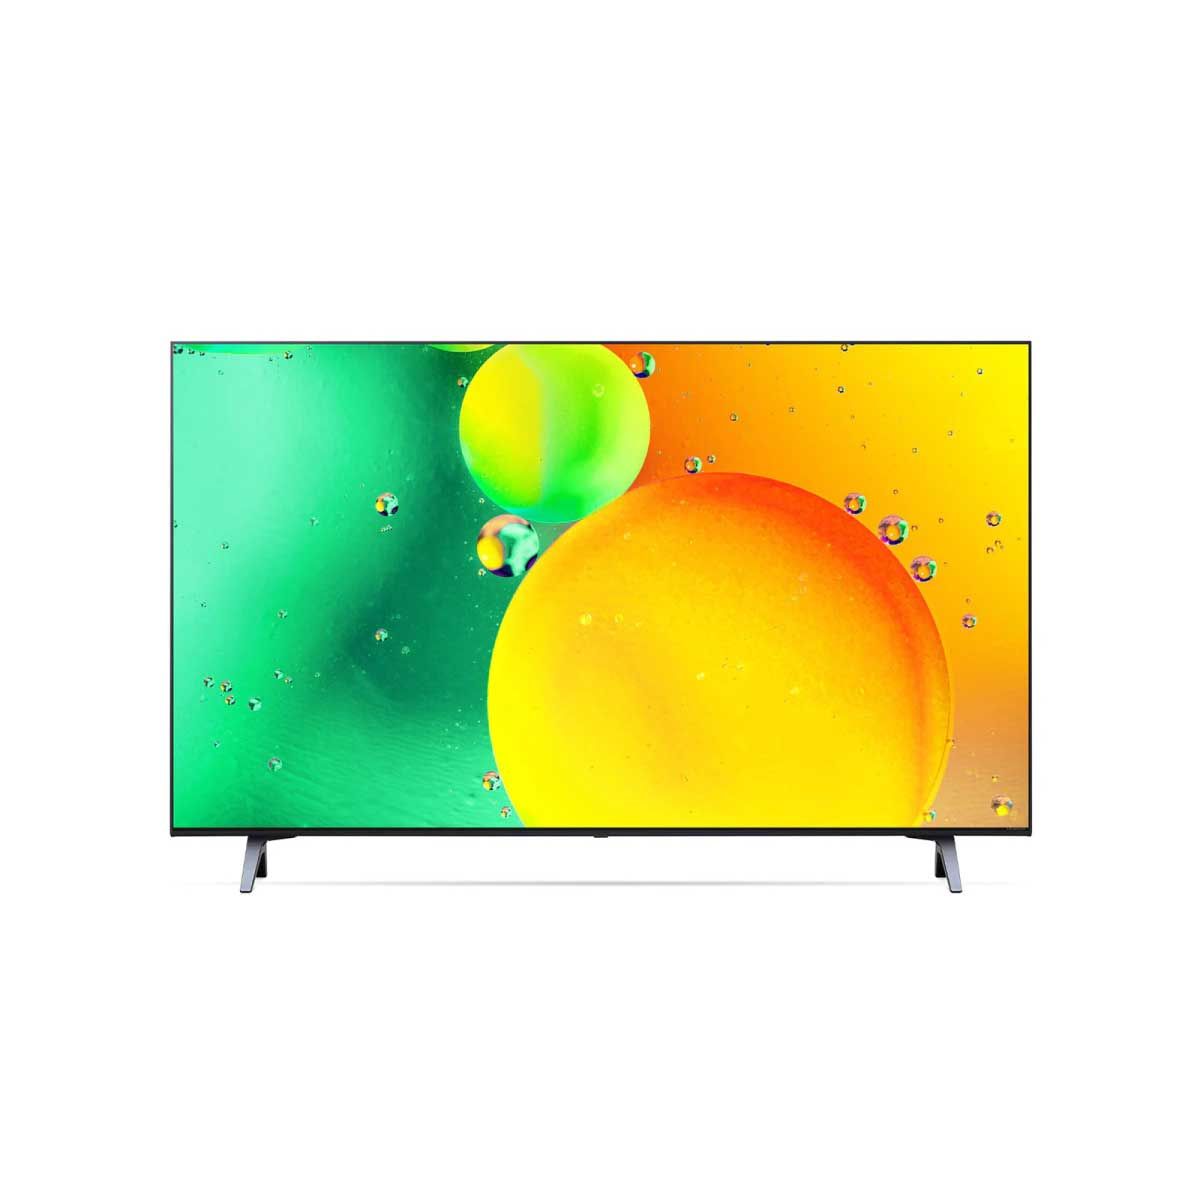 LG NANOCell 4K Smart TV รุ่น 43NANO75SQA  สมาร์ททีวี 43 นิ้ว MAGIC REMOTE